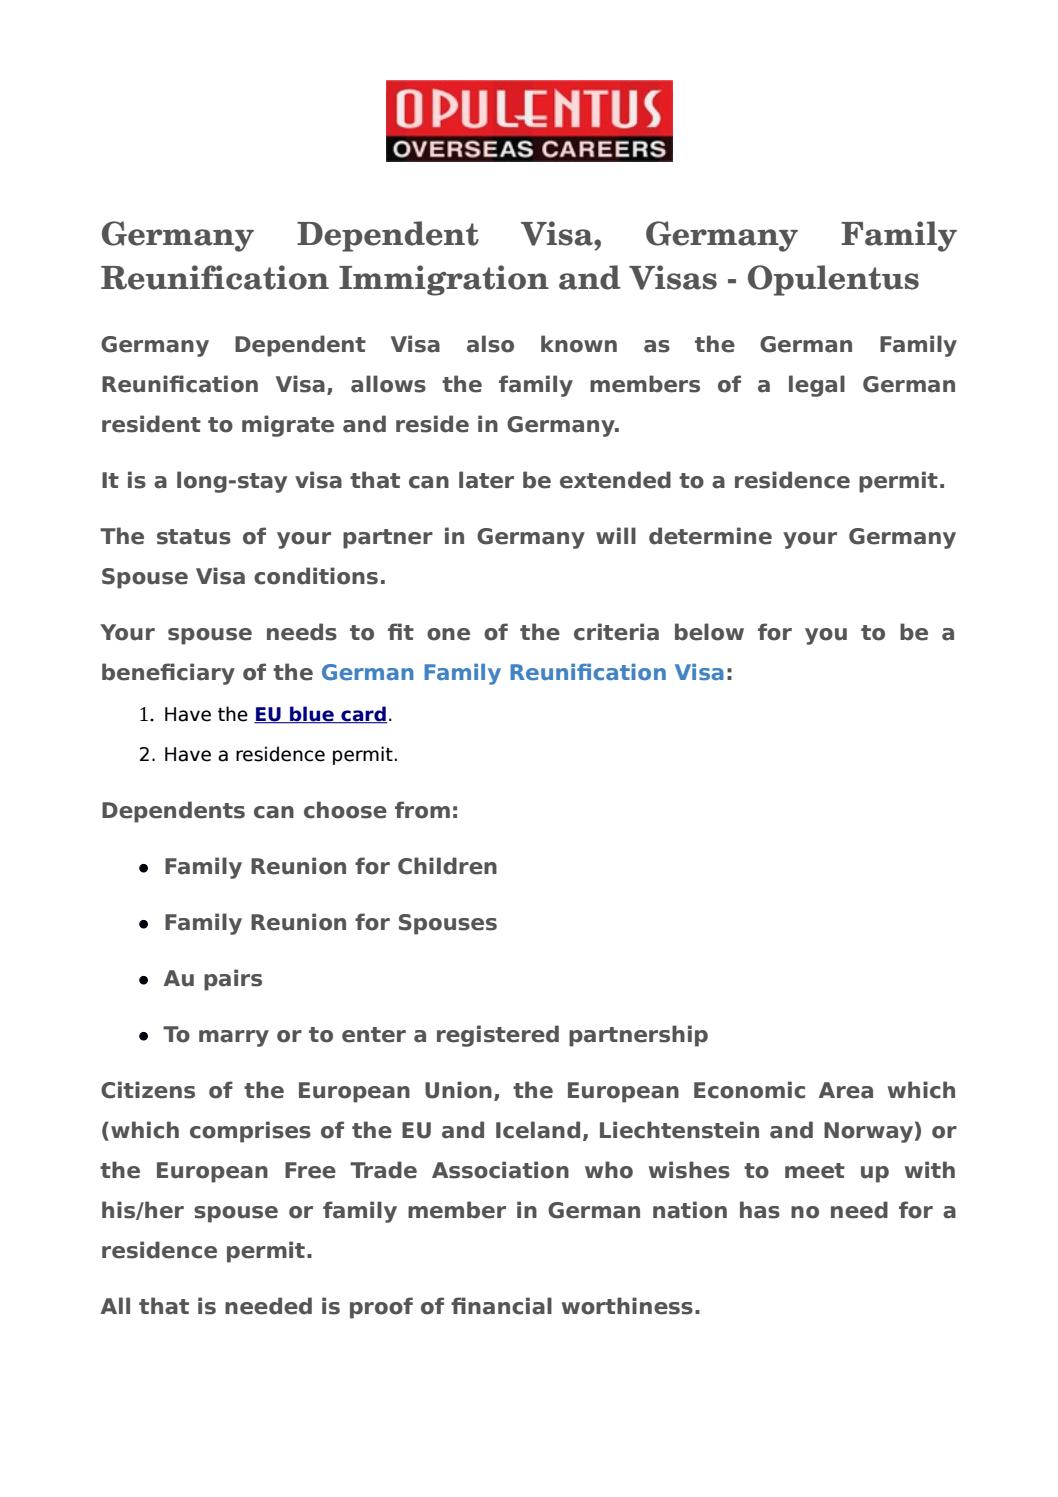 cover letter for spouse visa germany